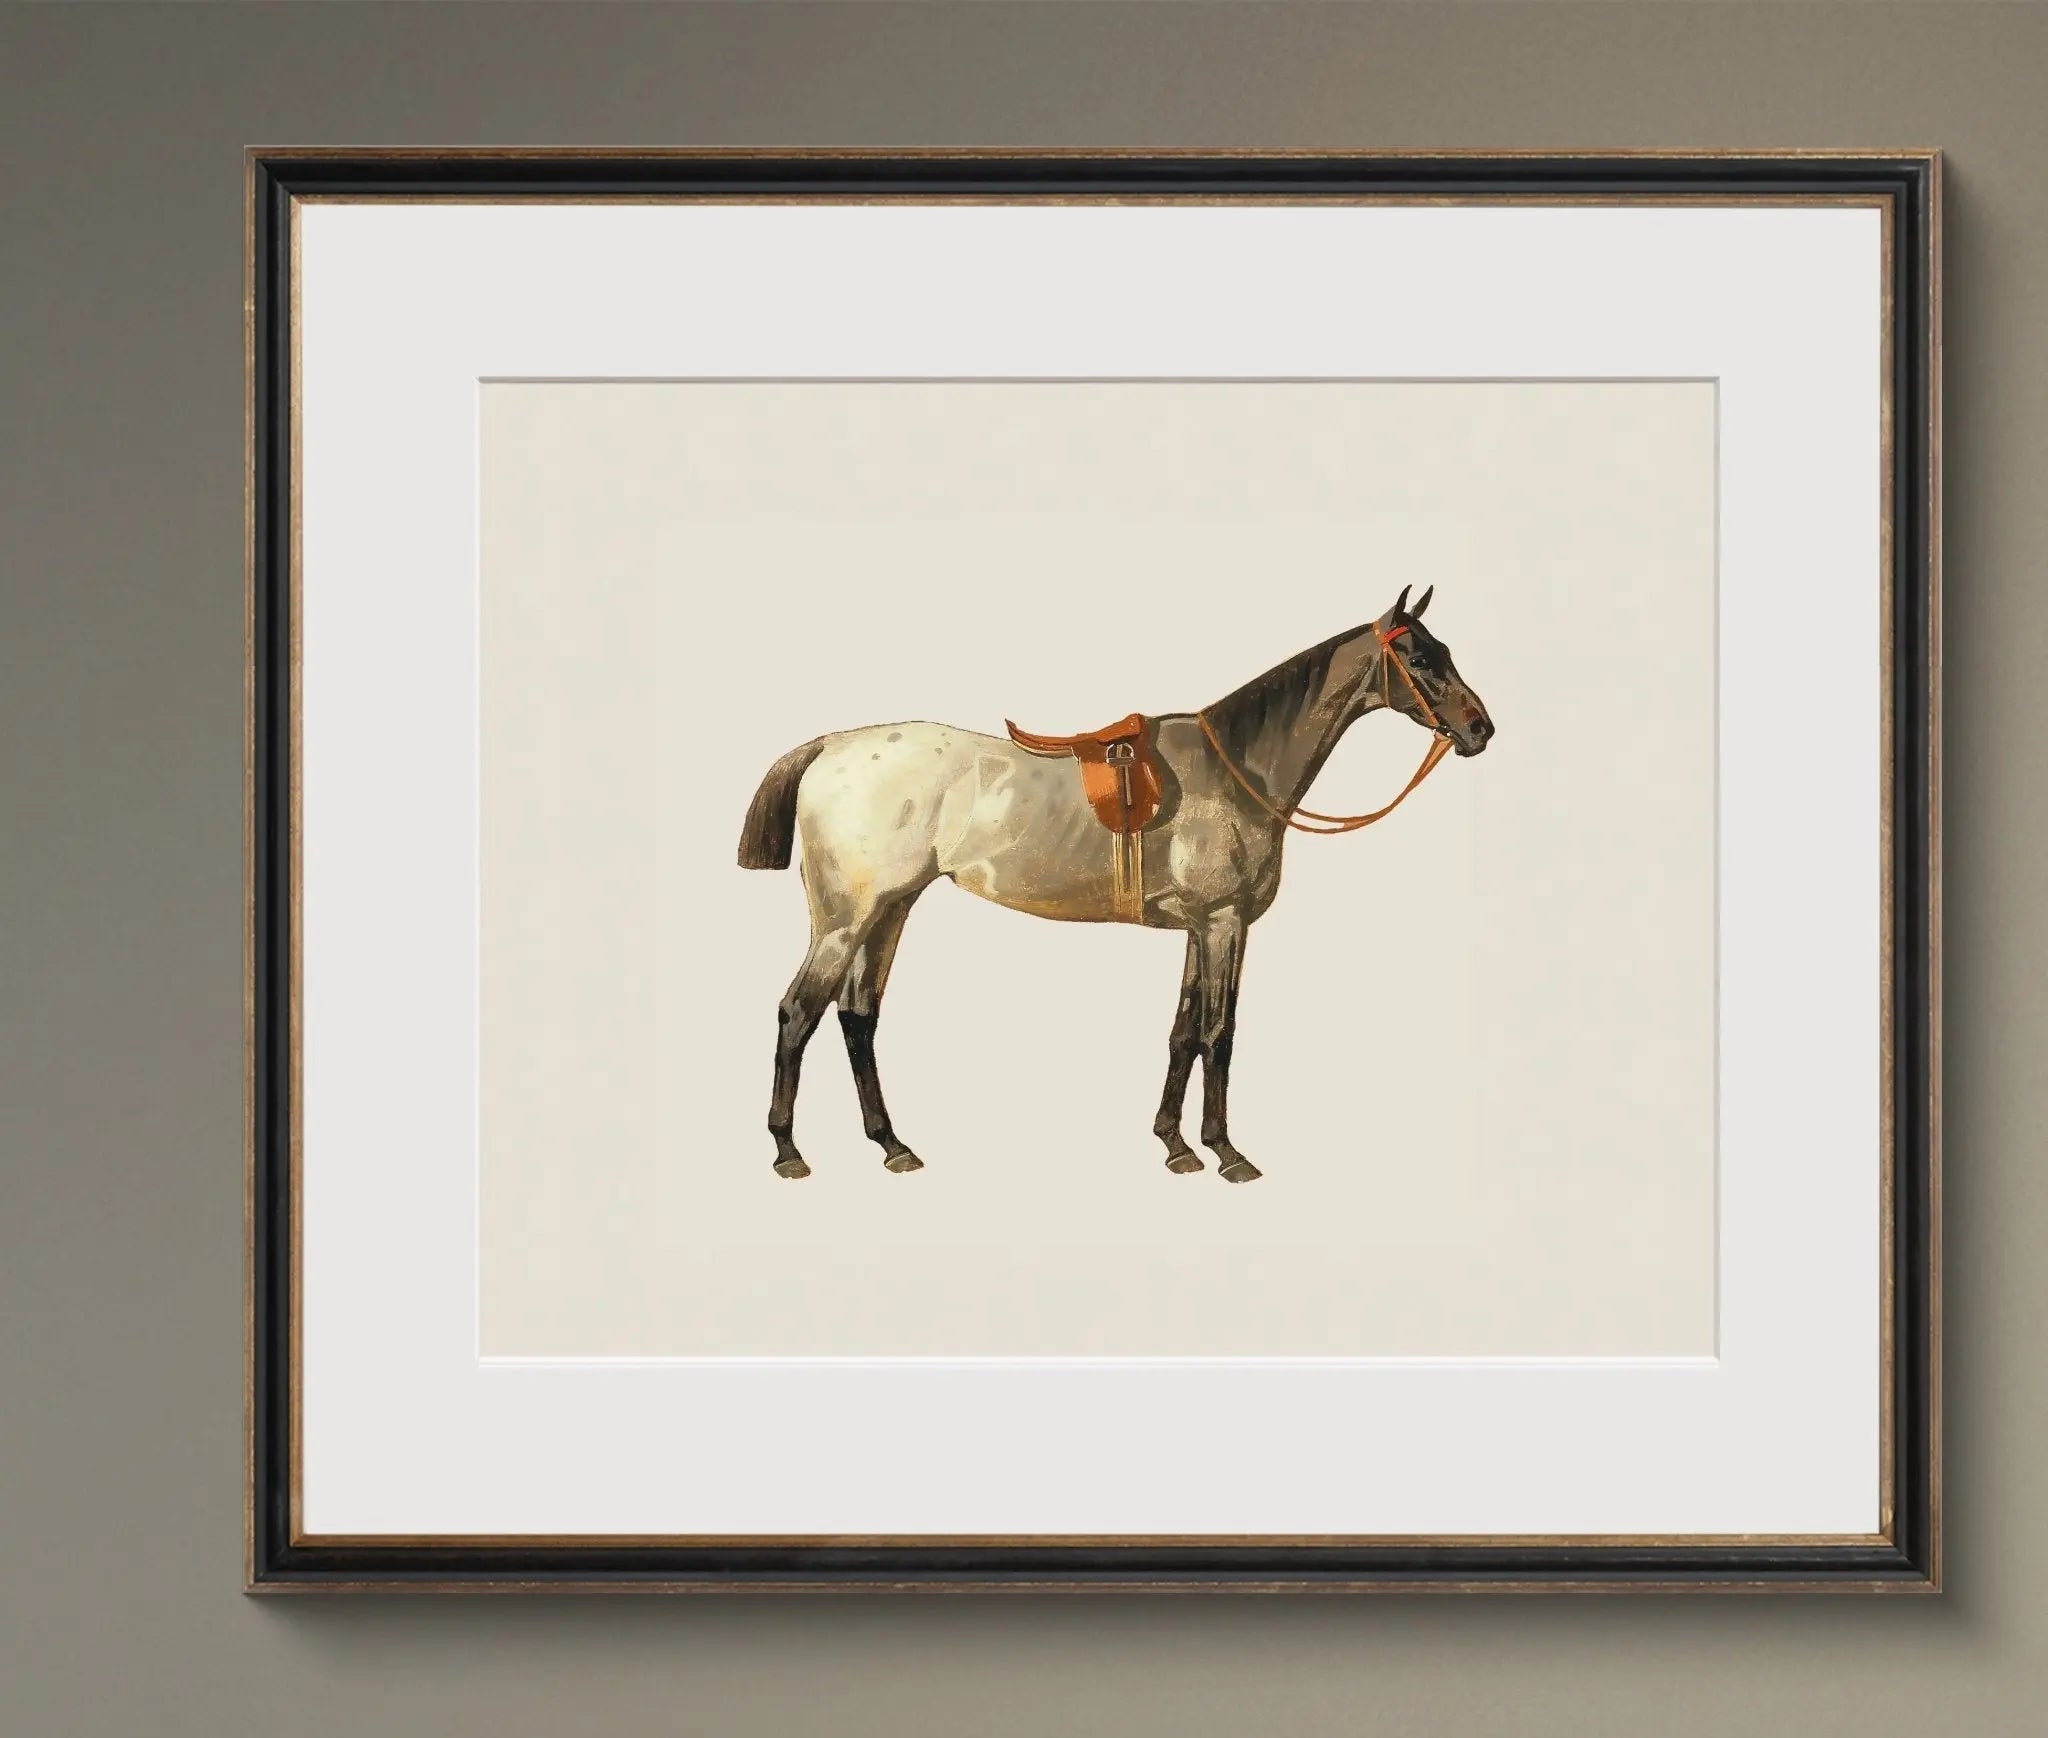 19th c. English Riding Horses - Emblem Atelier